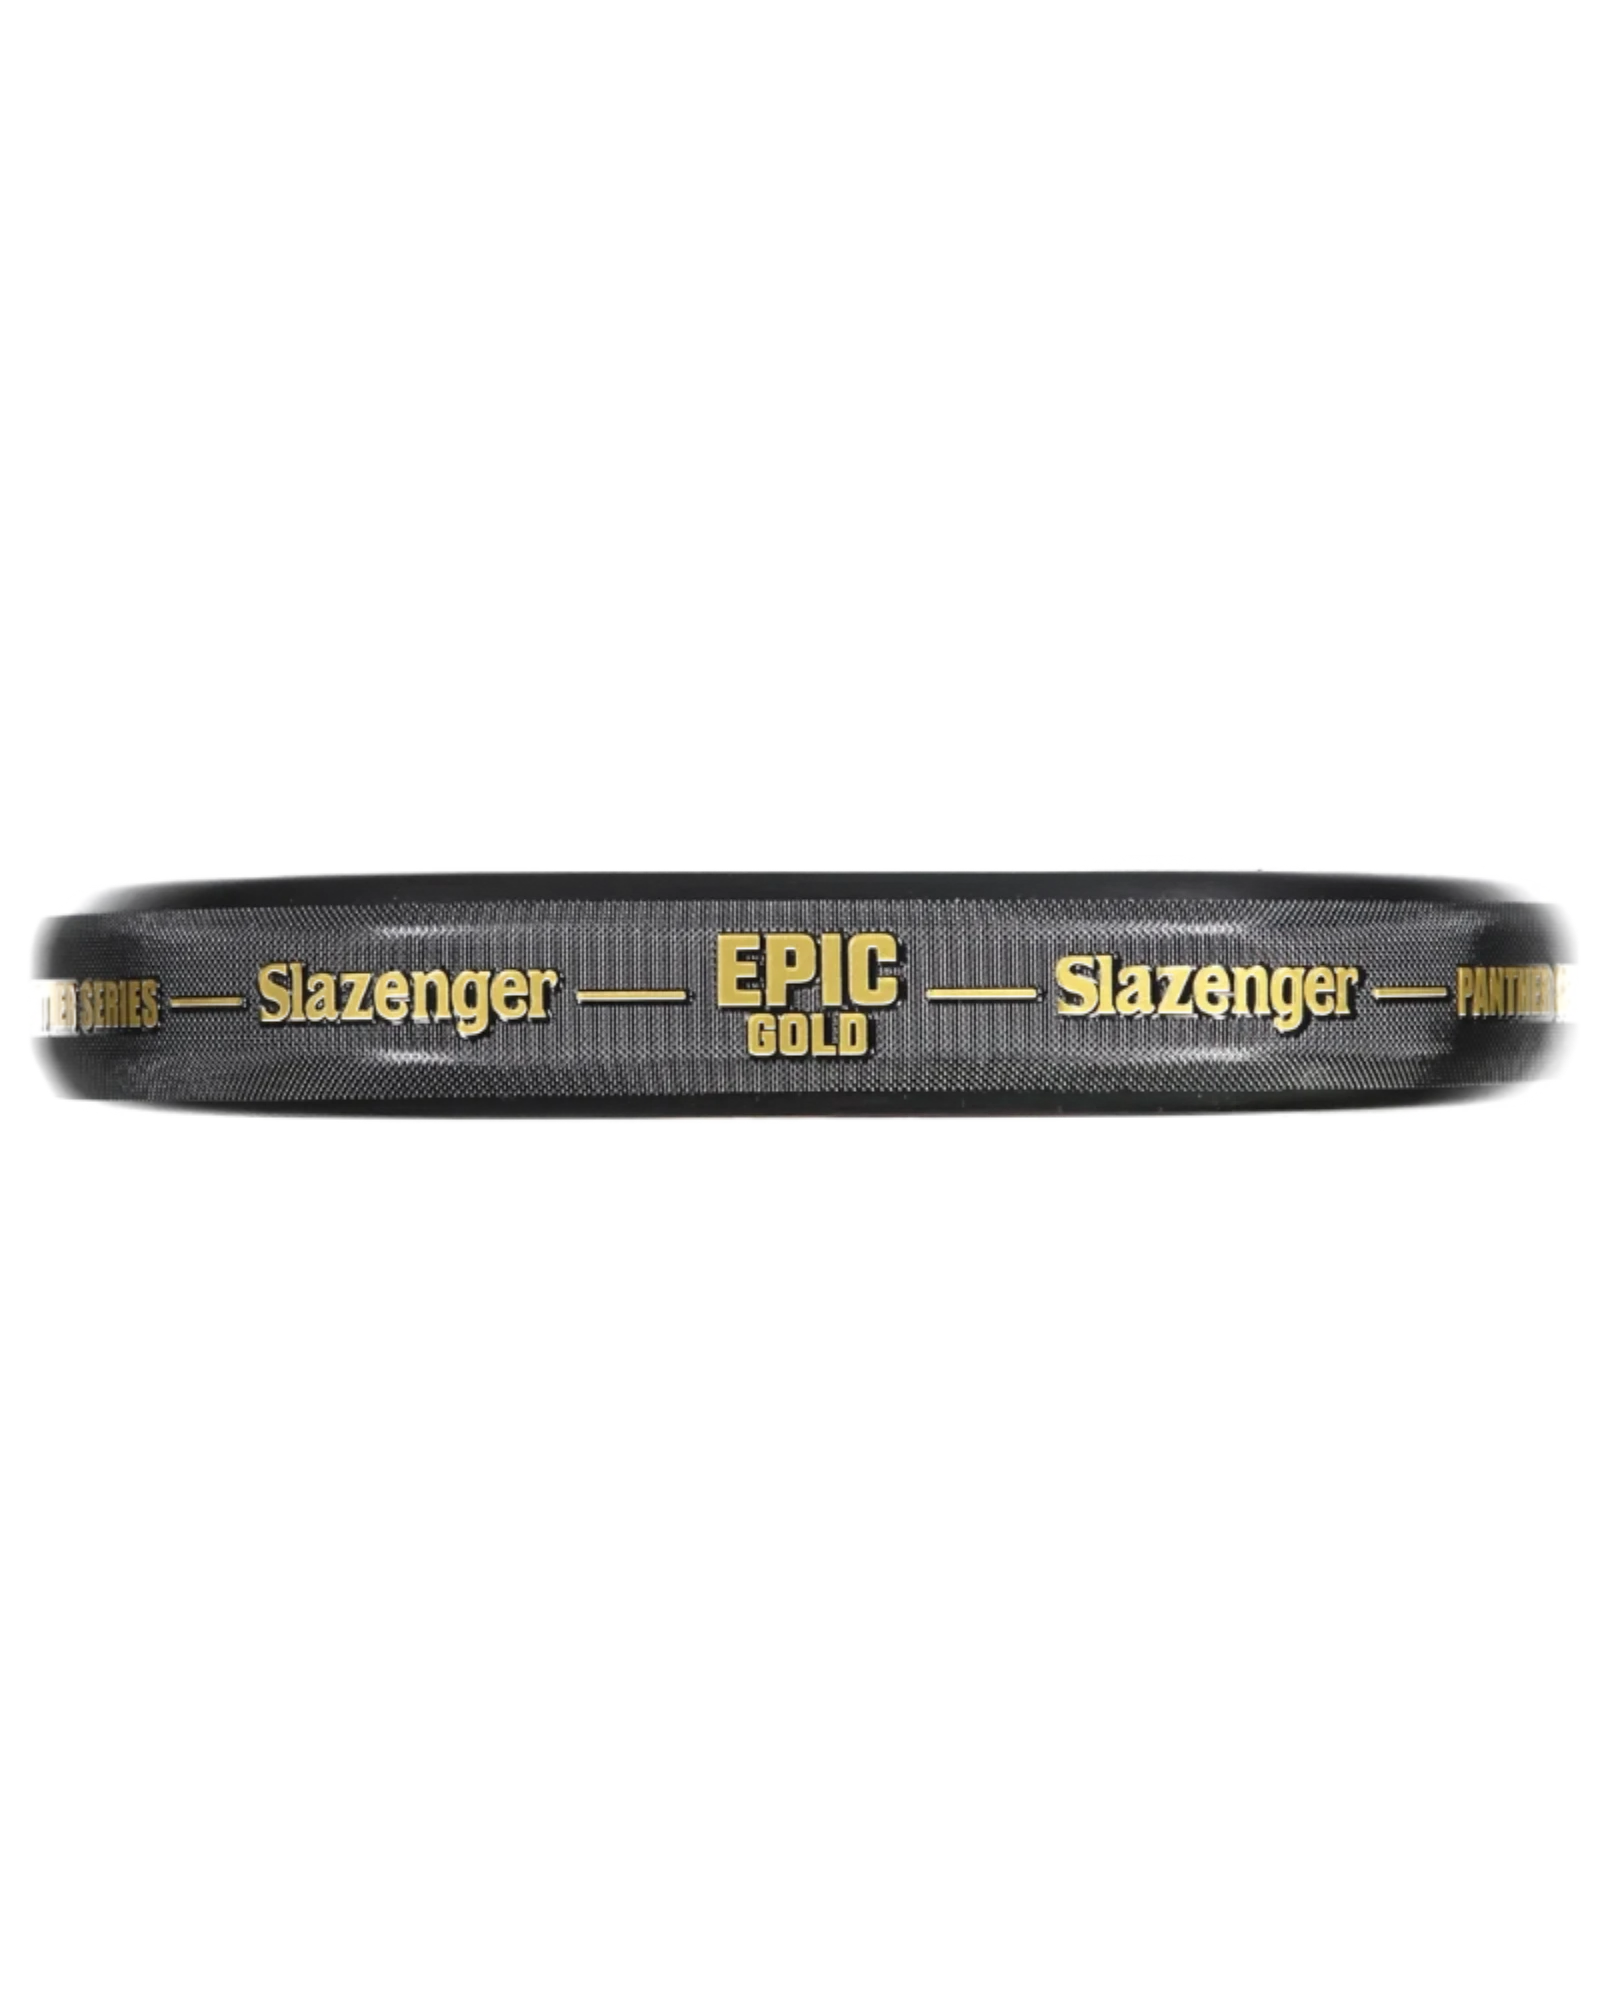 The Slazenger Panther Epic Gold Padel Racket